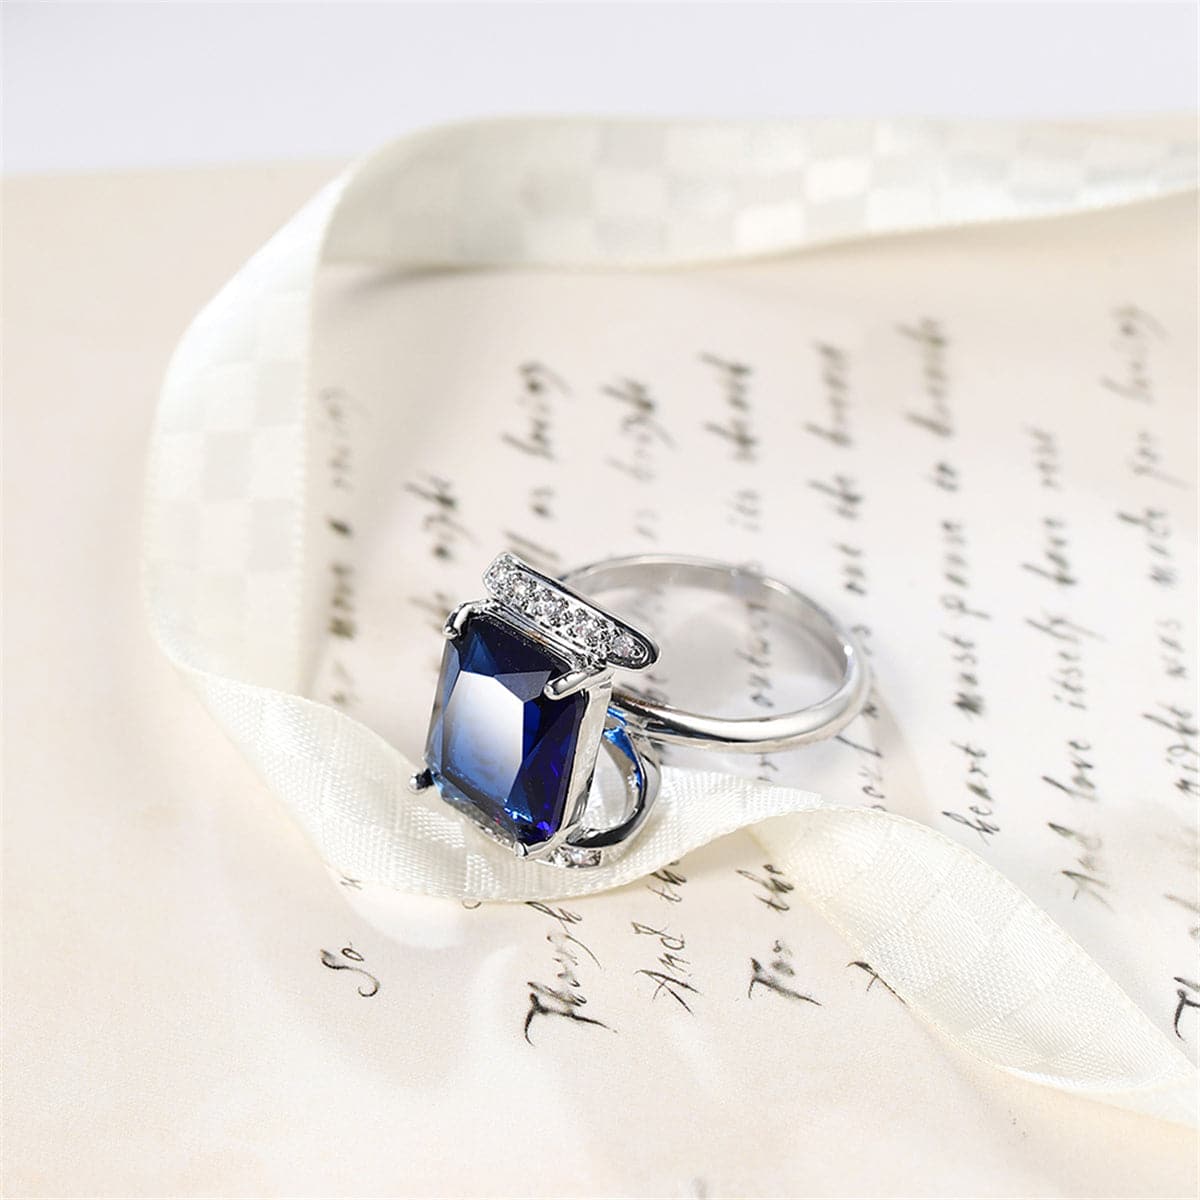 Navy Crystal & Cubic Zirconia Princess-Cut Ring